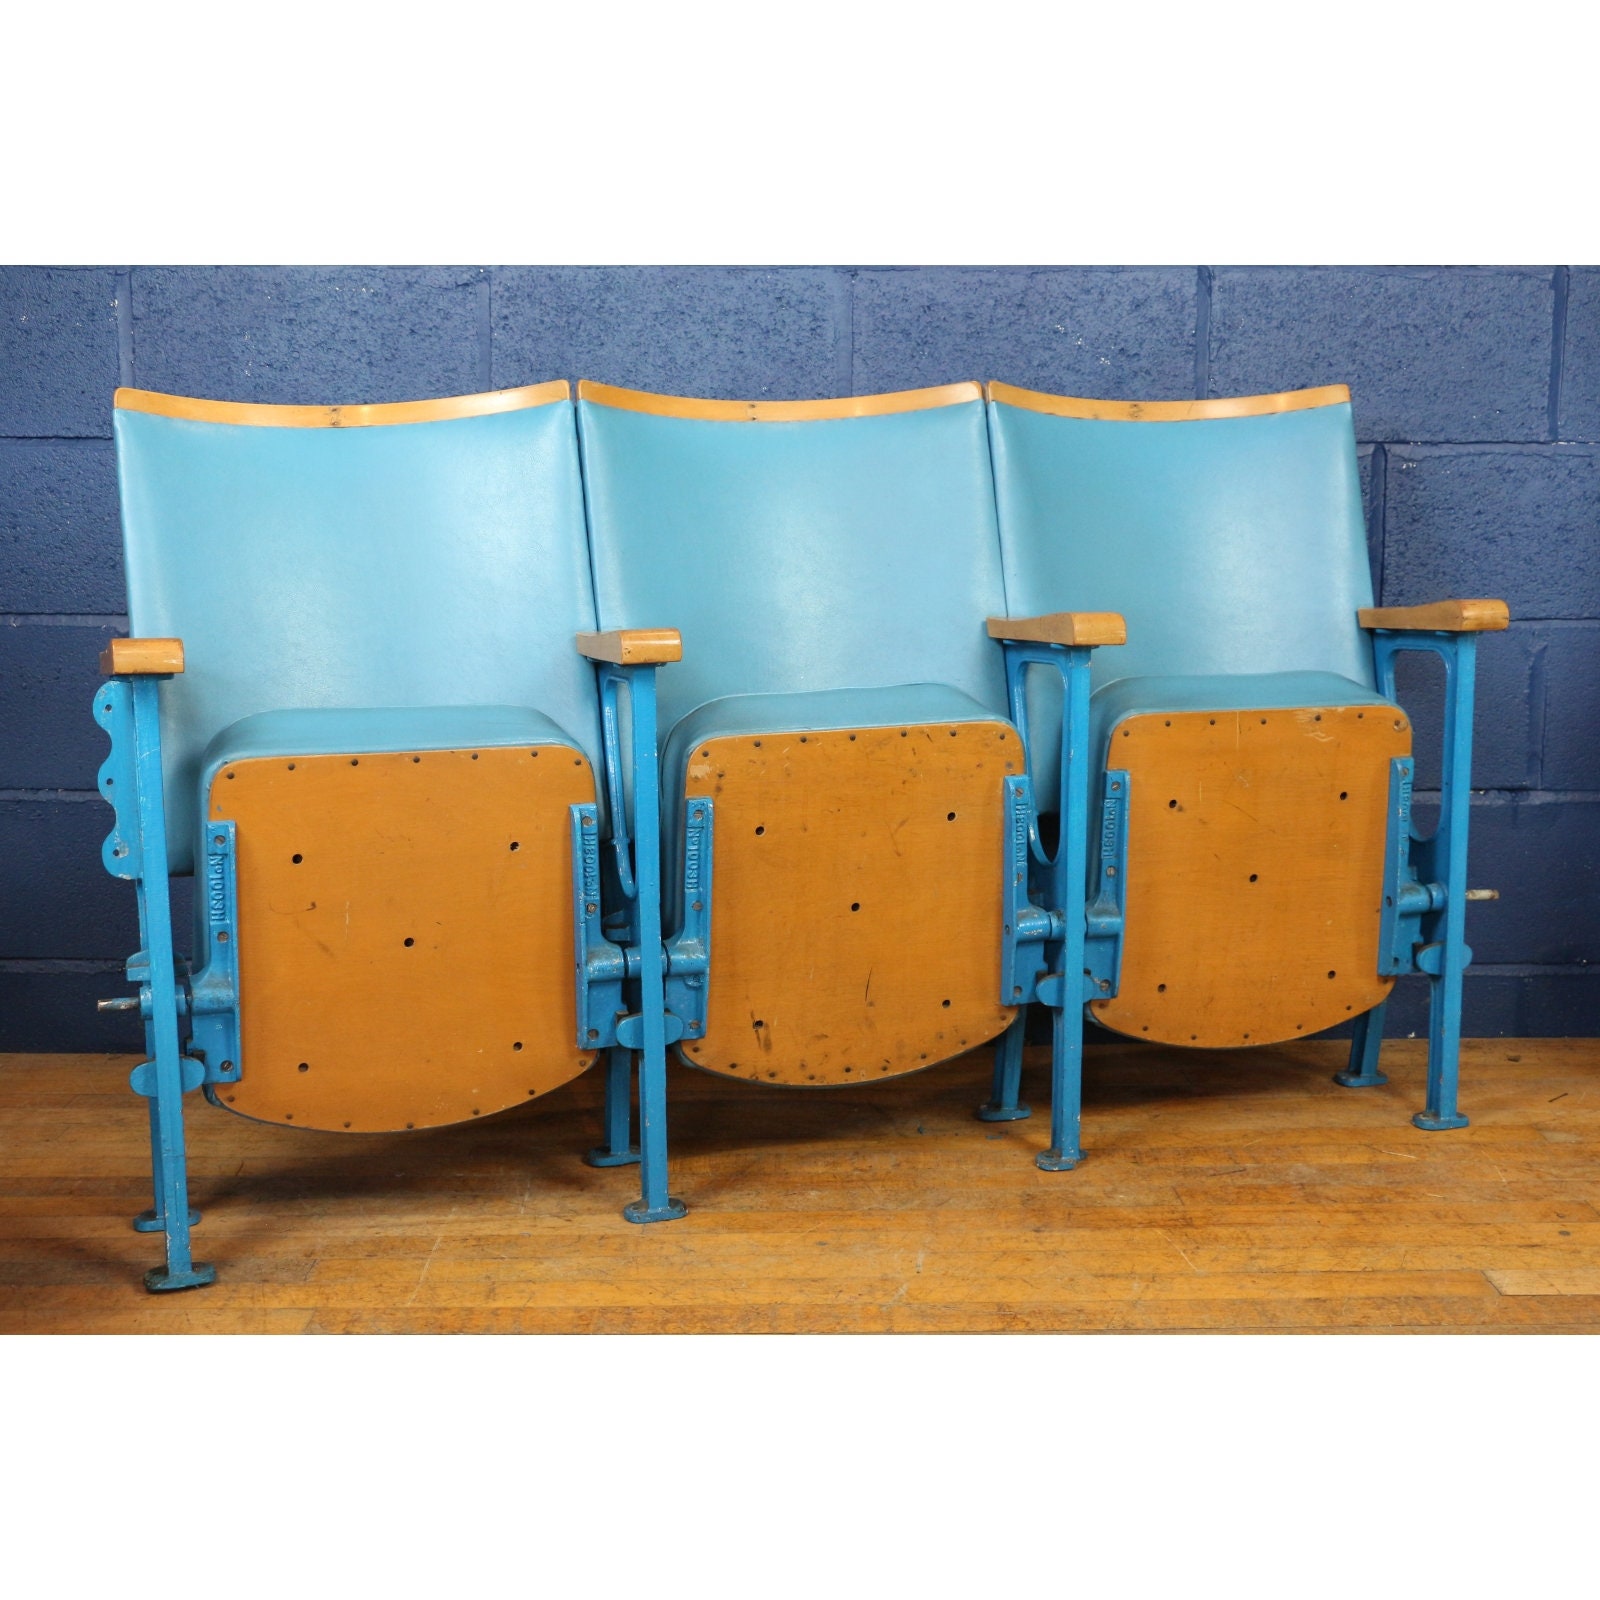 Vintage Bleacher Seats Pair, Stadium Seats, Mid Century Portable Seats,  Fishing Boat Seats, Metal and Vinyl Folding Seats, Football Seats -   Sweden